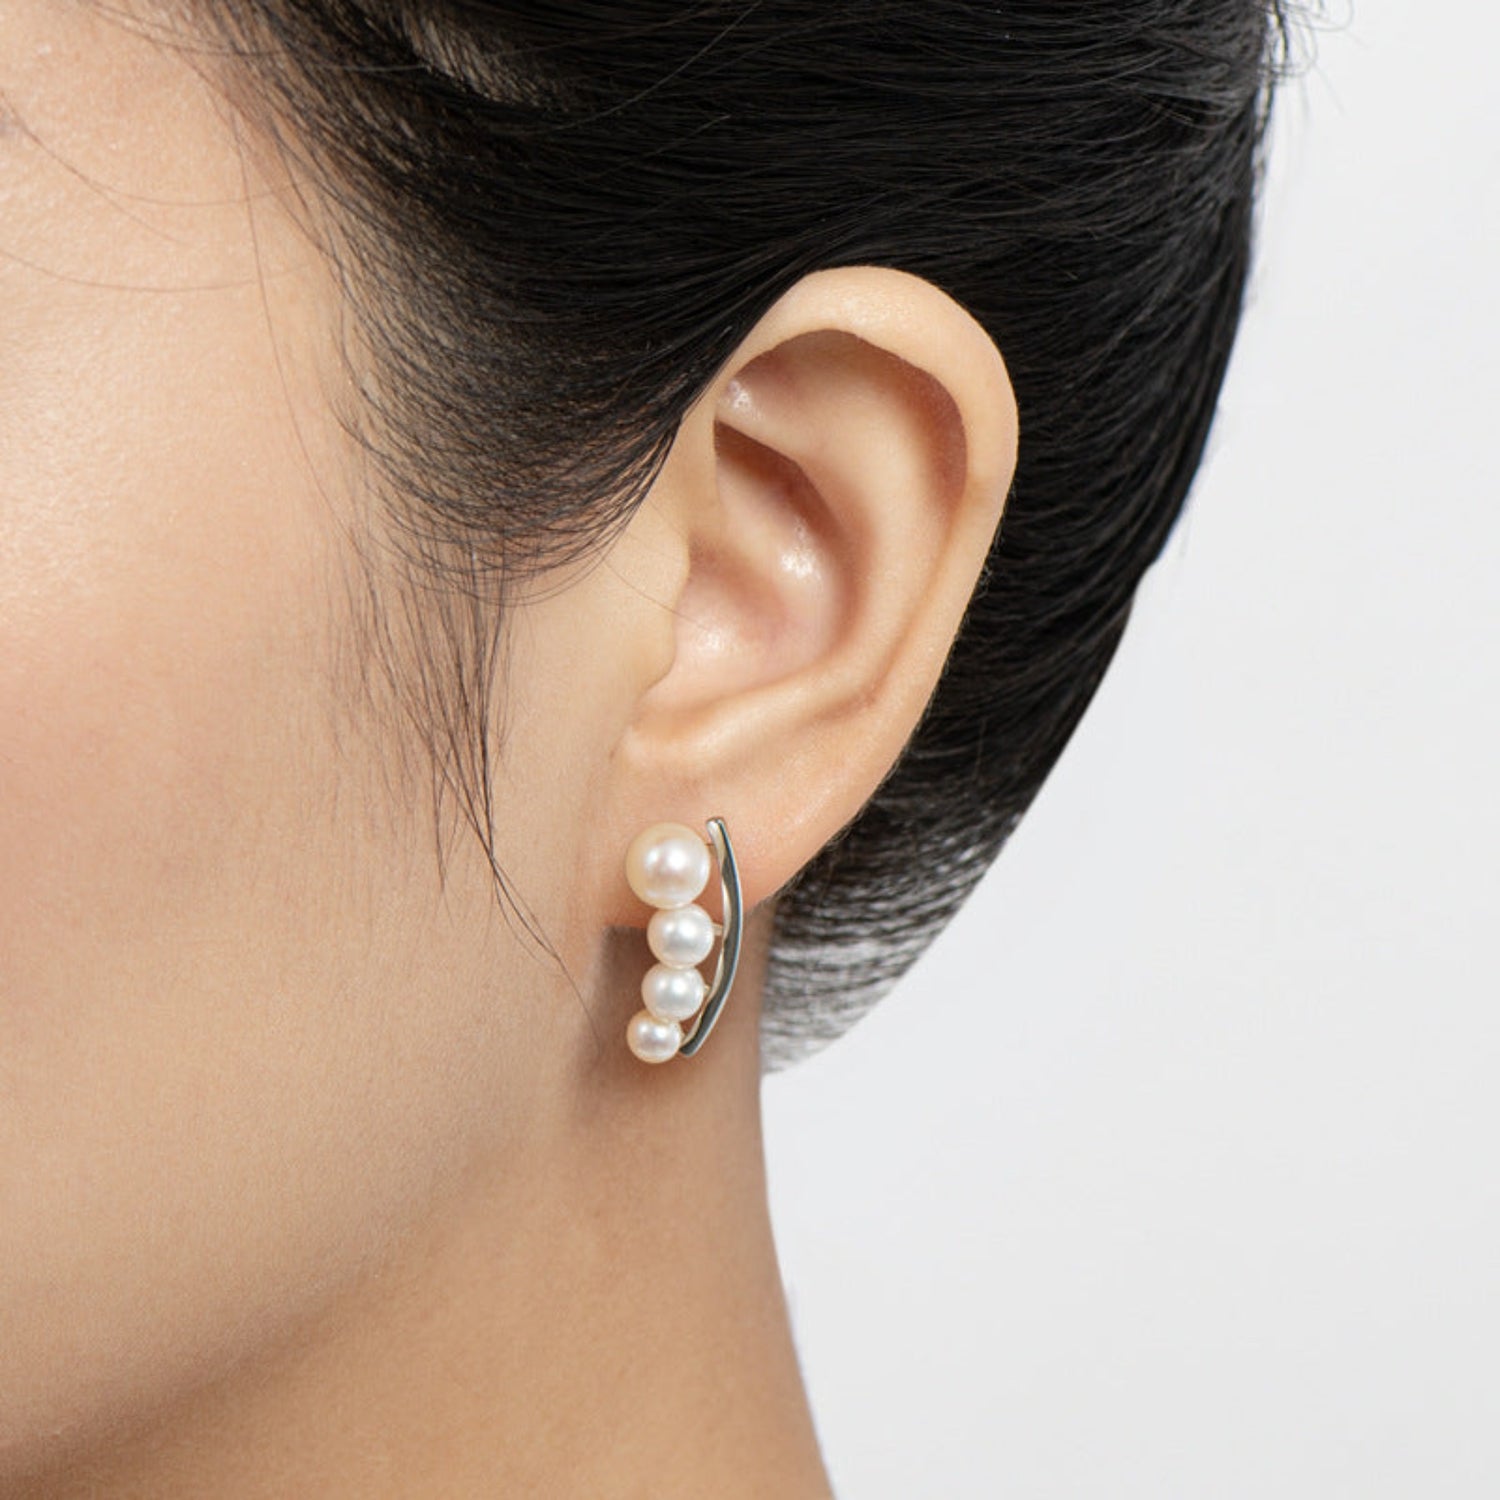 Curved 7-7.5mm Freshwater Pearl Stud Earrings